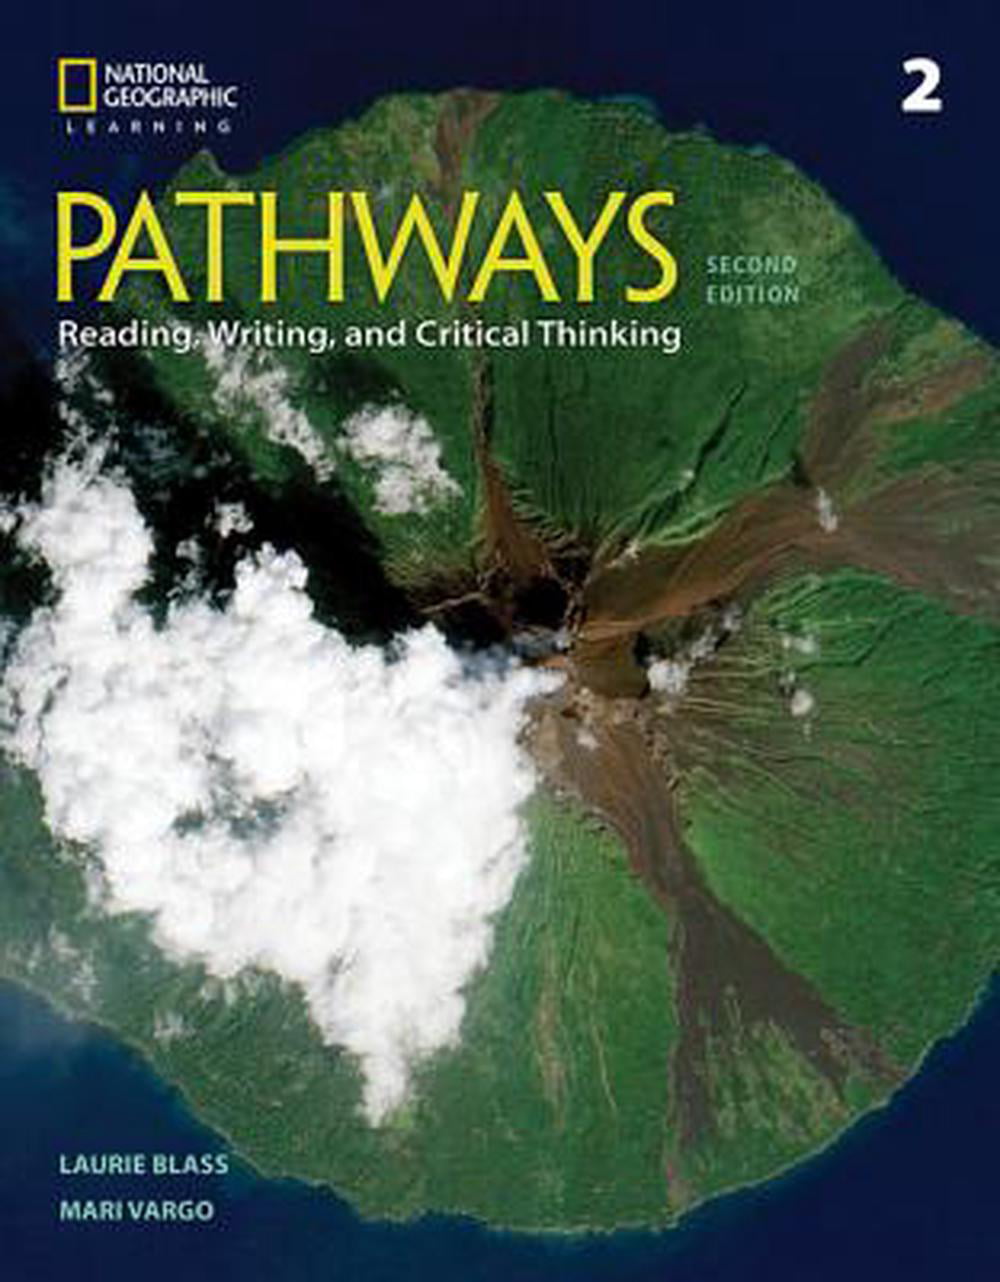 pathways 3 reading writing and critical thinking answer key pdf